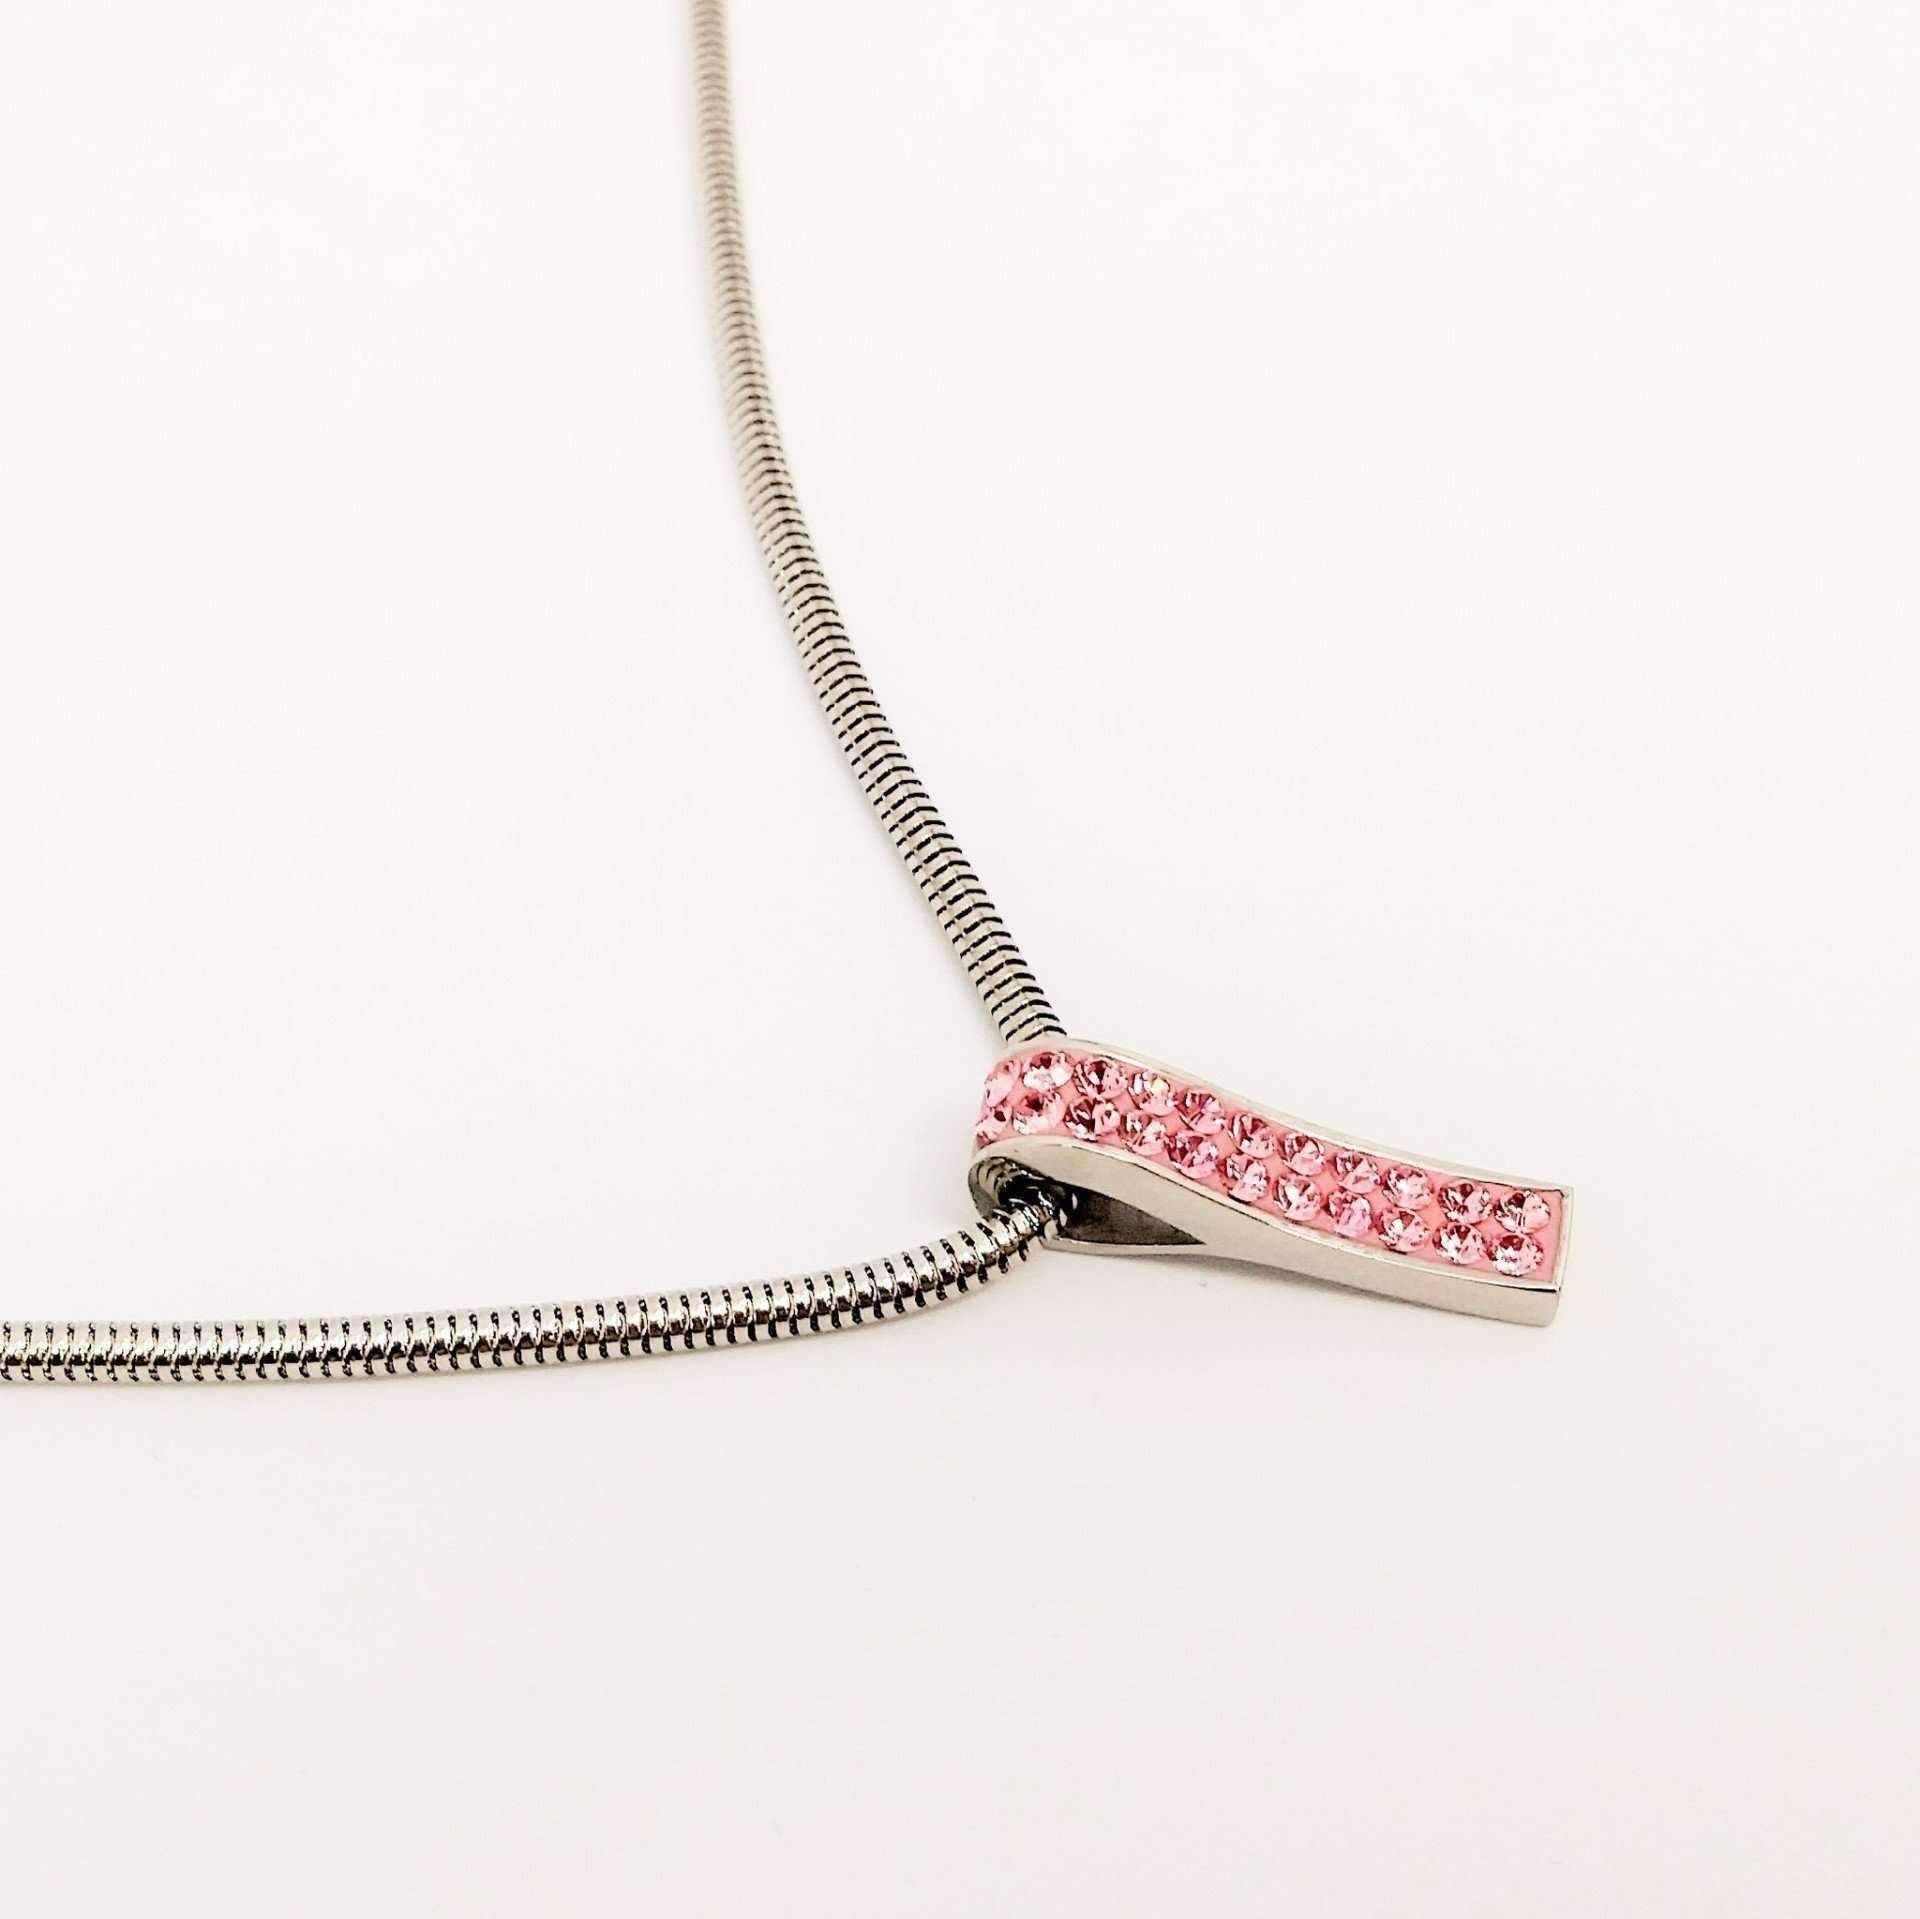 Feshionn IOBI Necklaces Pink IOBI Crystals Bar Ribbon Necklace